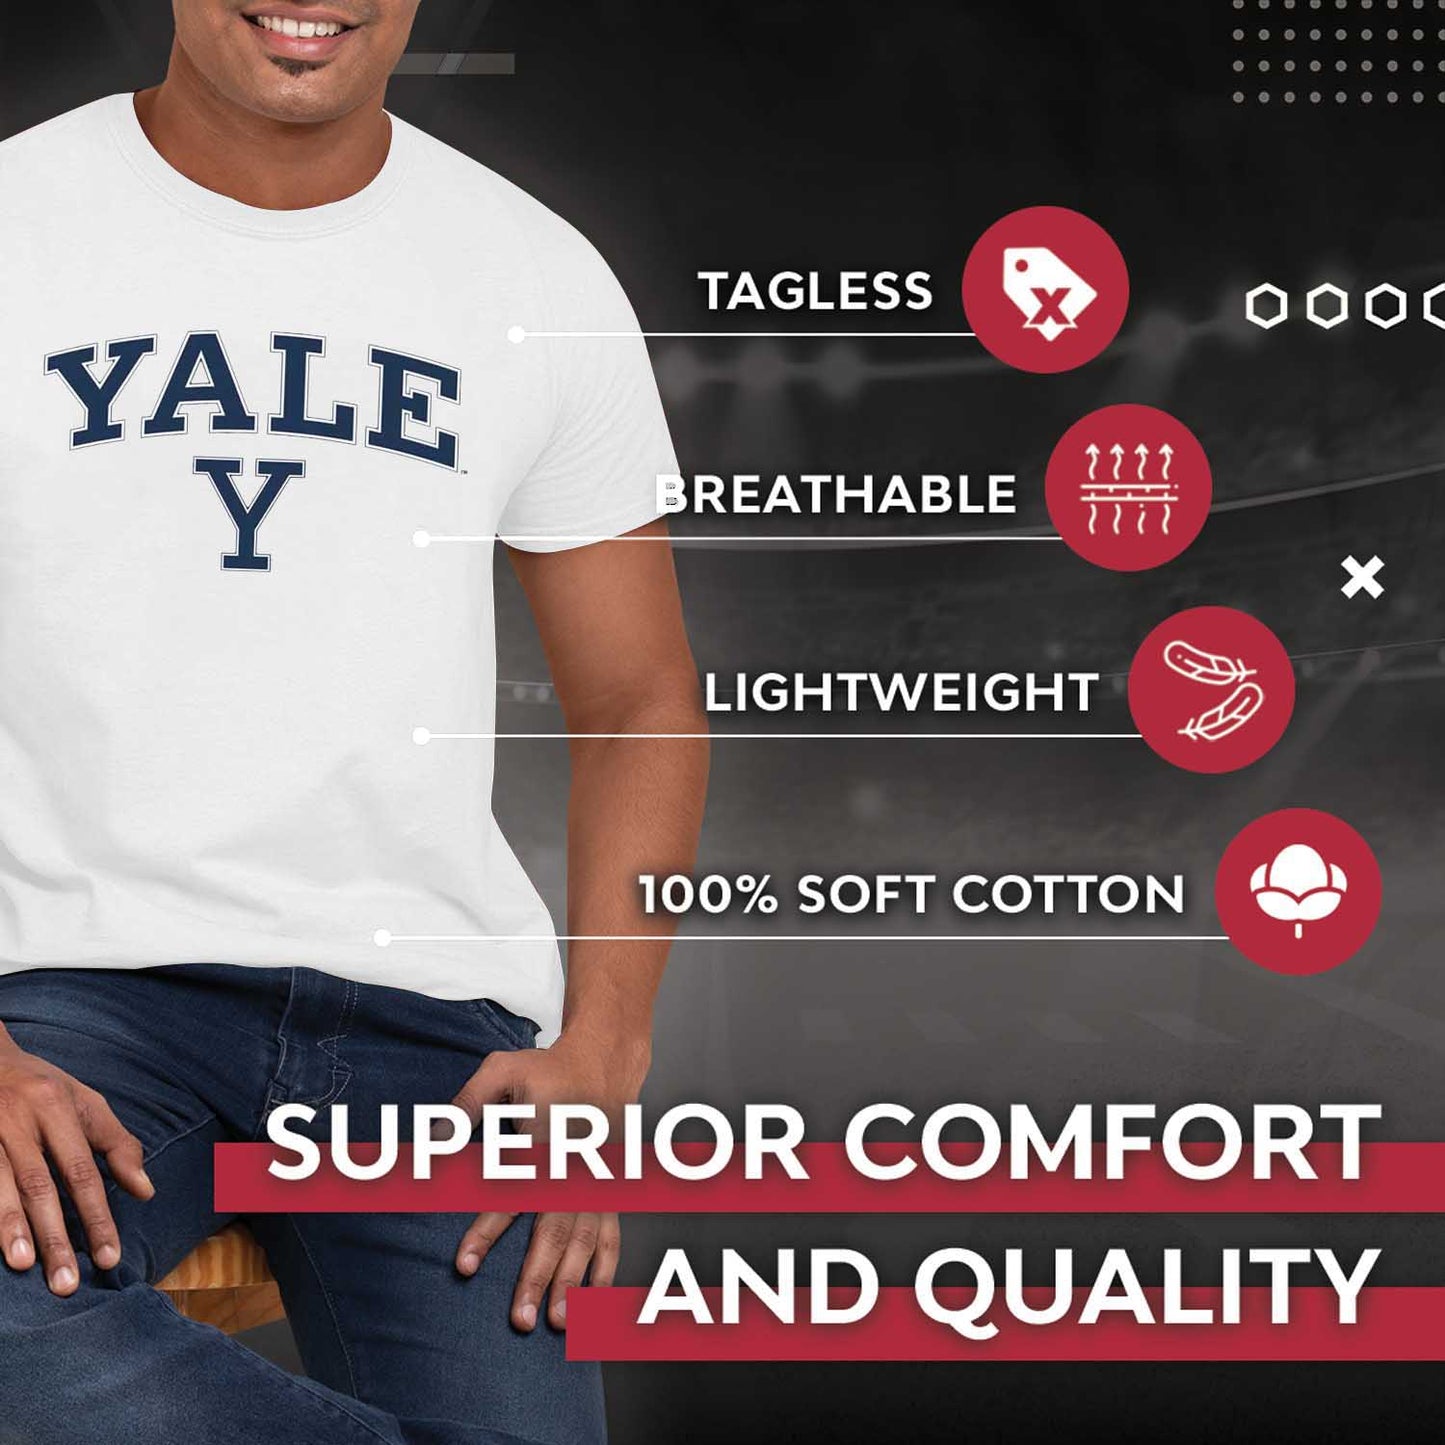 Yale Bulldogs NCAA Adult Gameday Cotton T-Shirt - White